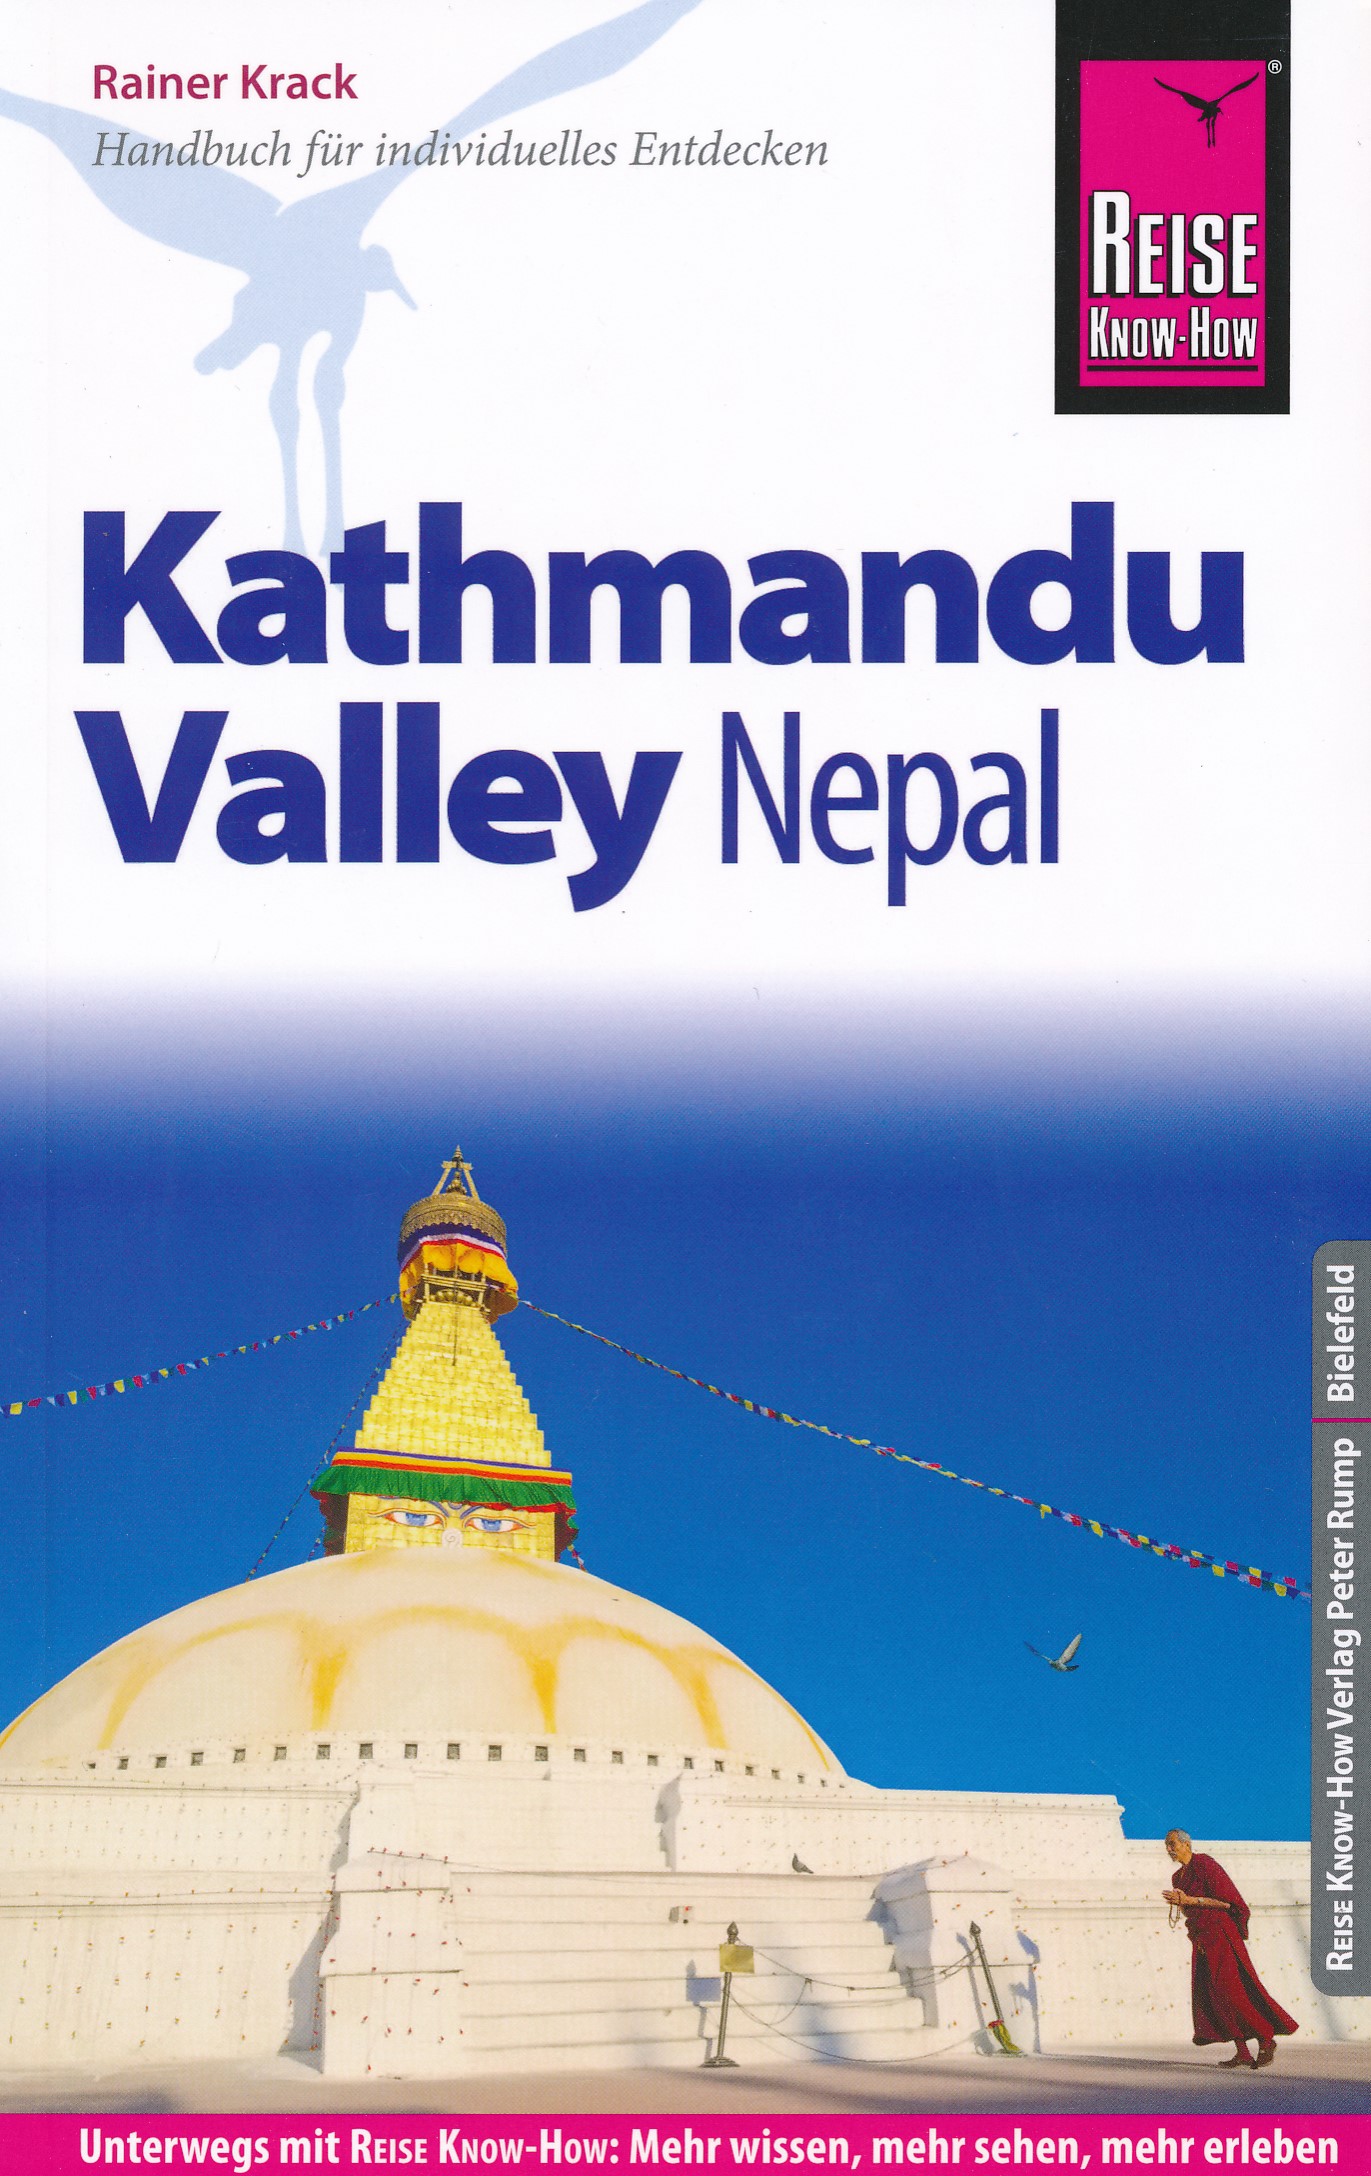 Online bestellen: Reisgids Kathmandu Valley - Nepal | Reise Know-How Verlag